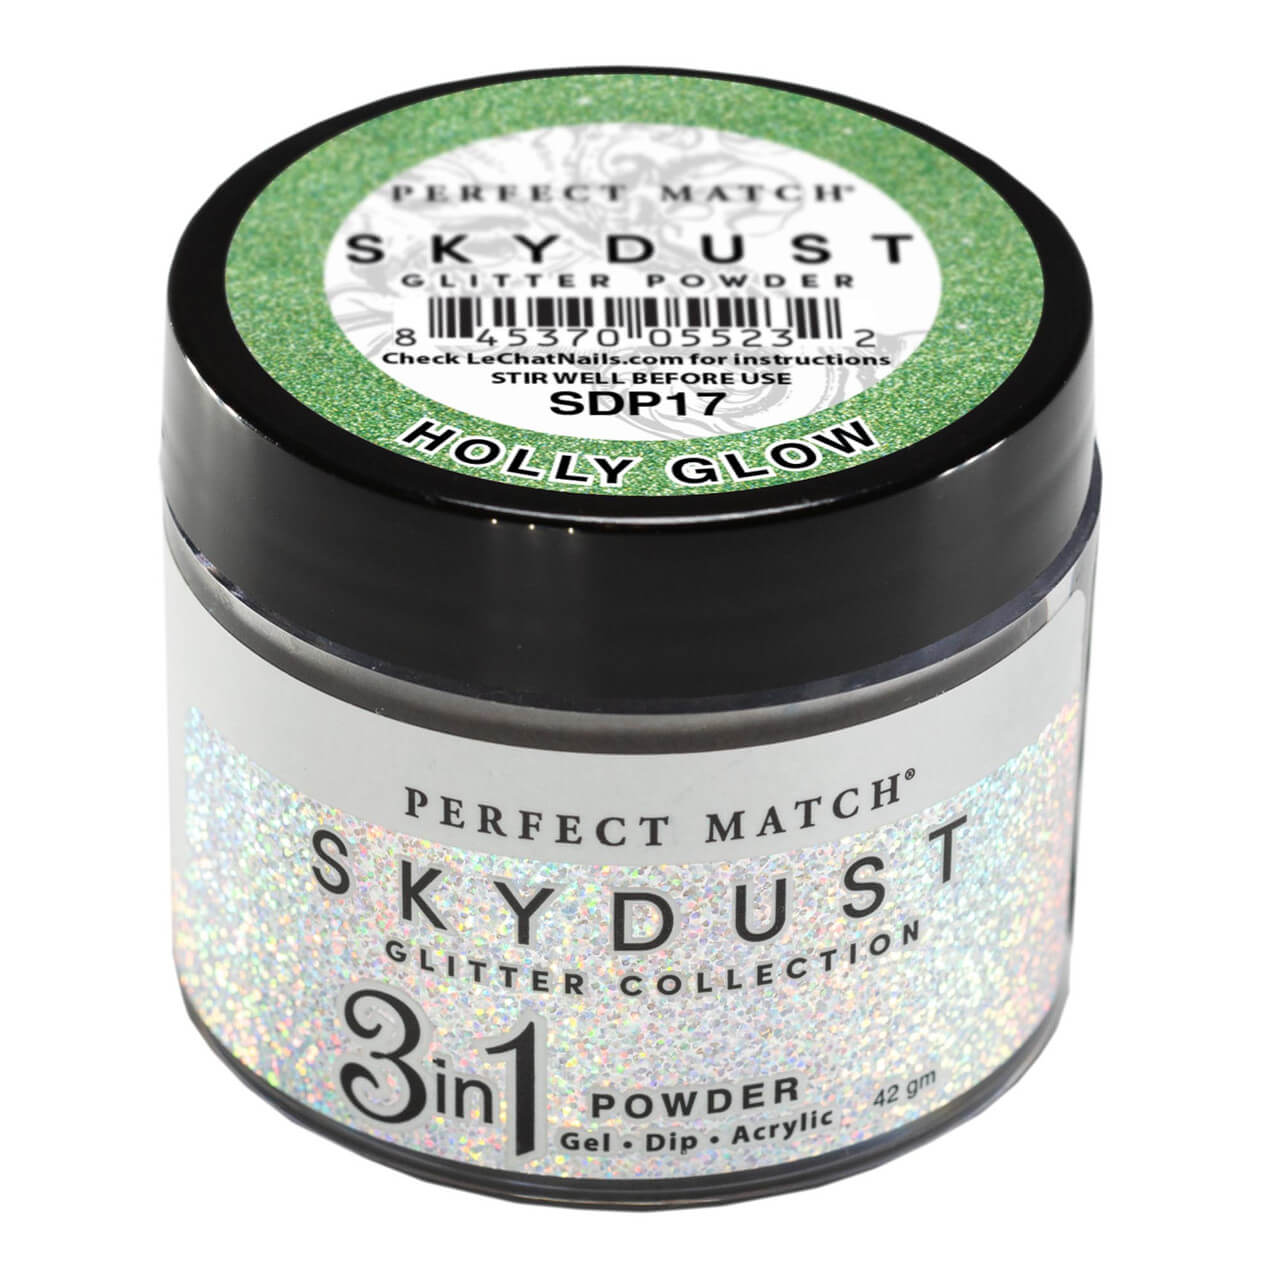 LeChat Perfect Match Sky Dust Glitter Powder - Holly Glow 1.48 oz - #SDP17 - Premier Nail Supply 